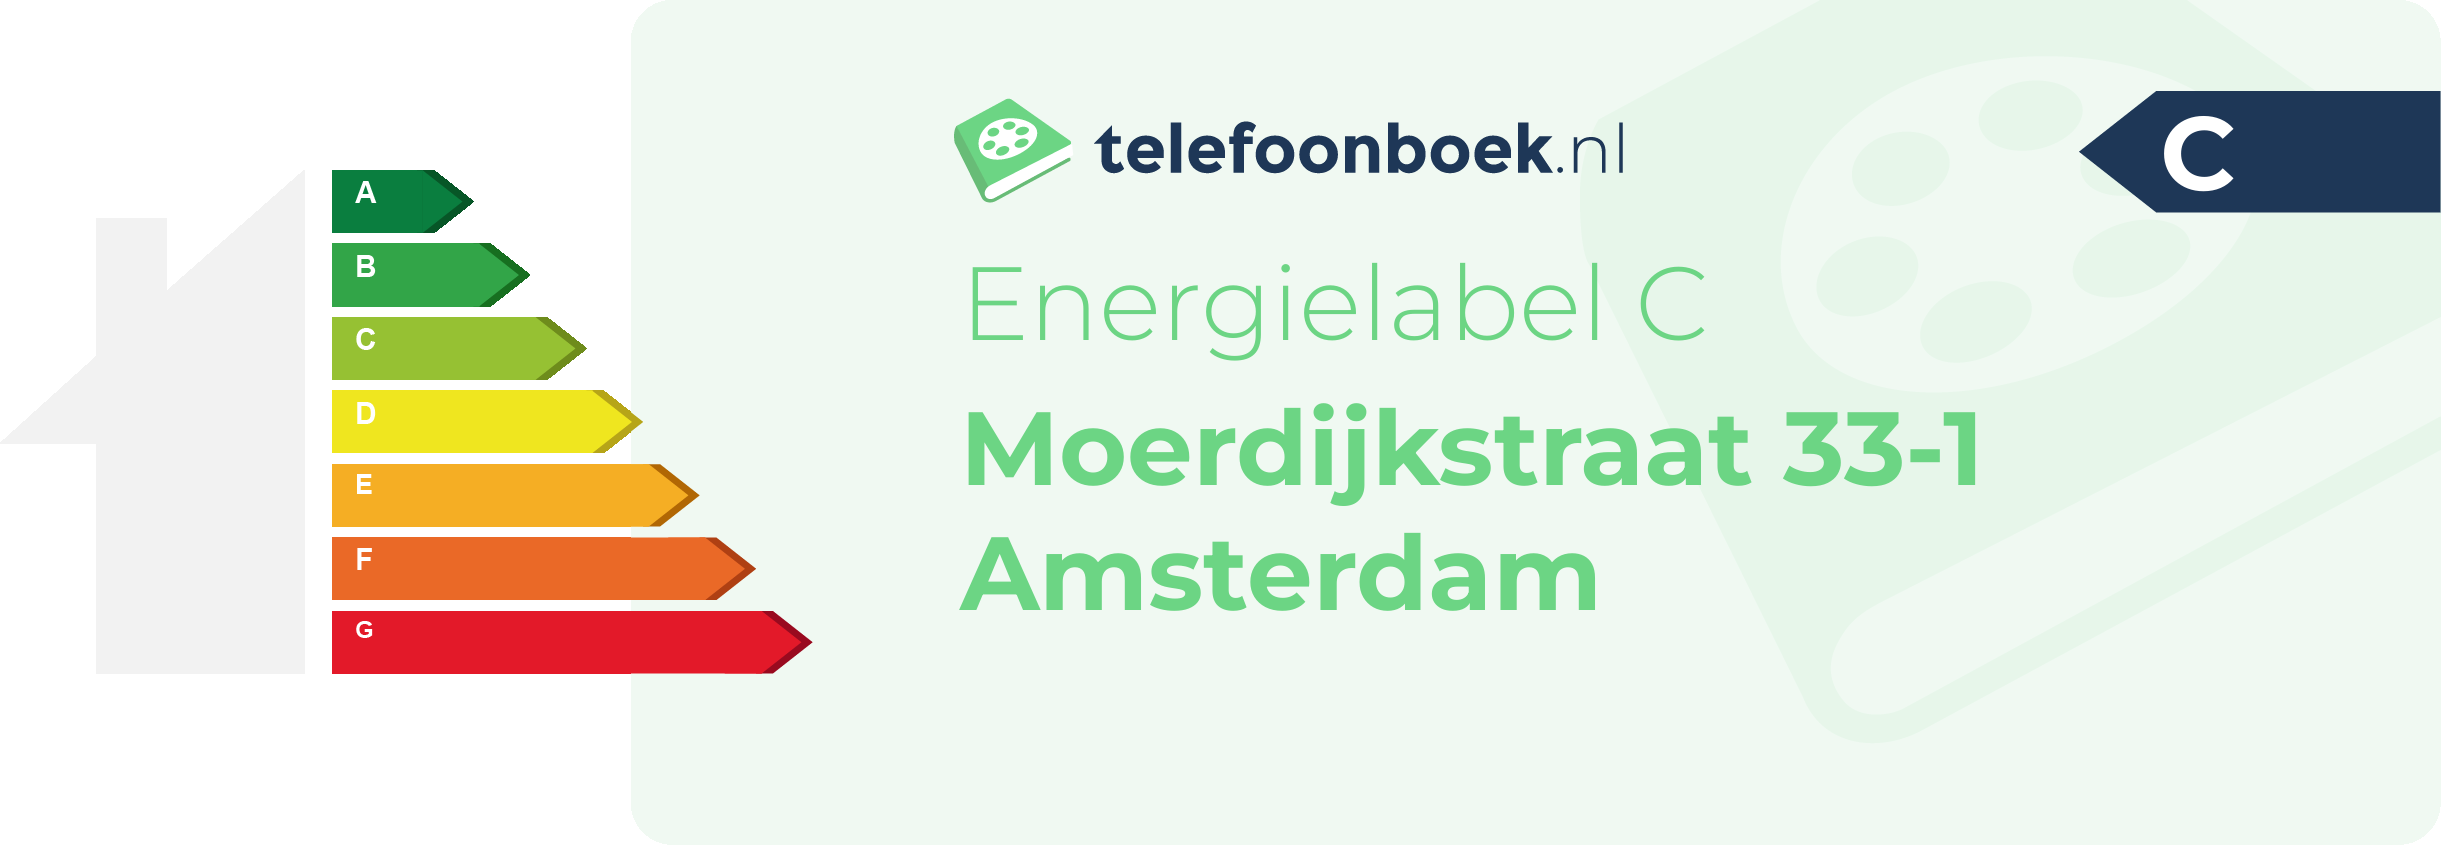 Energielabel Moerdijkstraat 33-1 Amsterdam